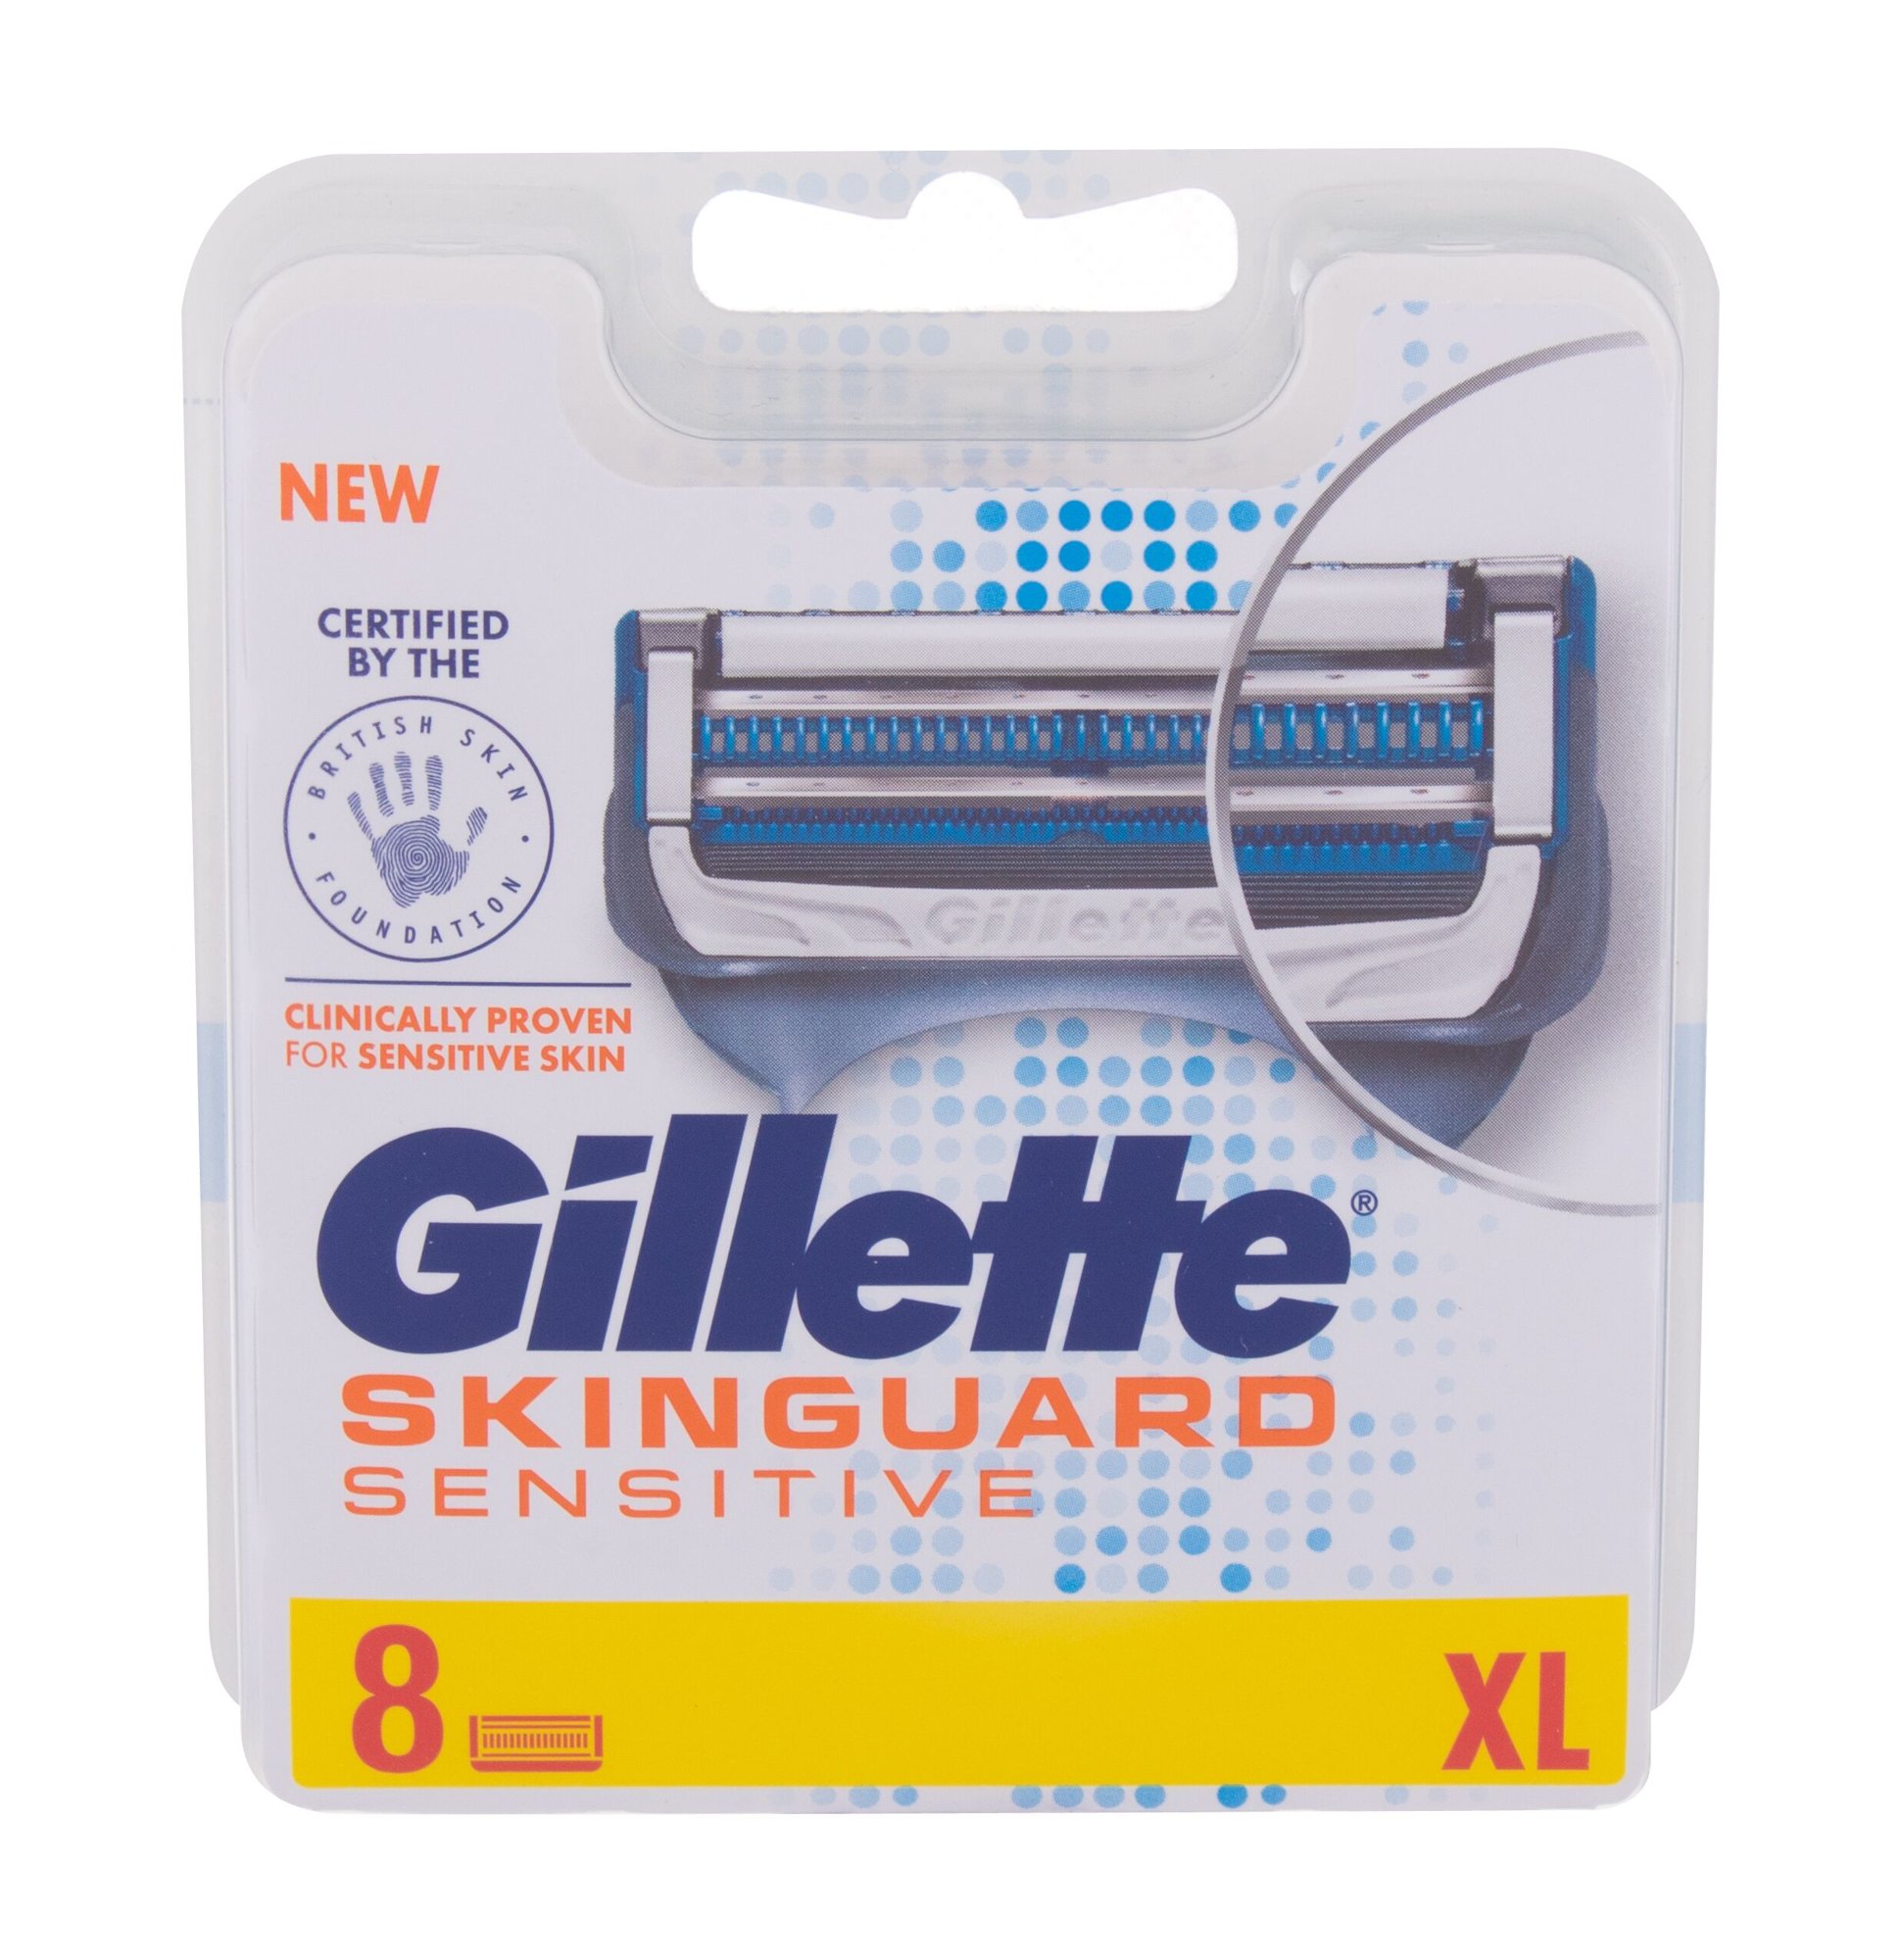 Gillette Skinguard Sensitive Sensitive skustuvo galvutė